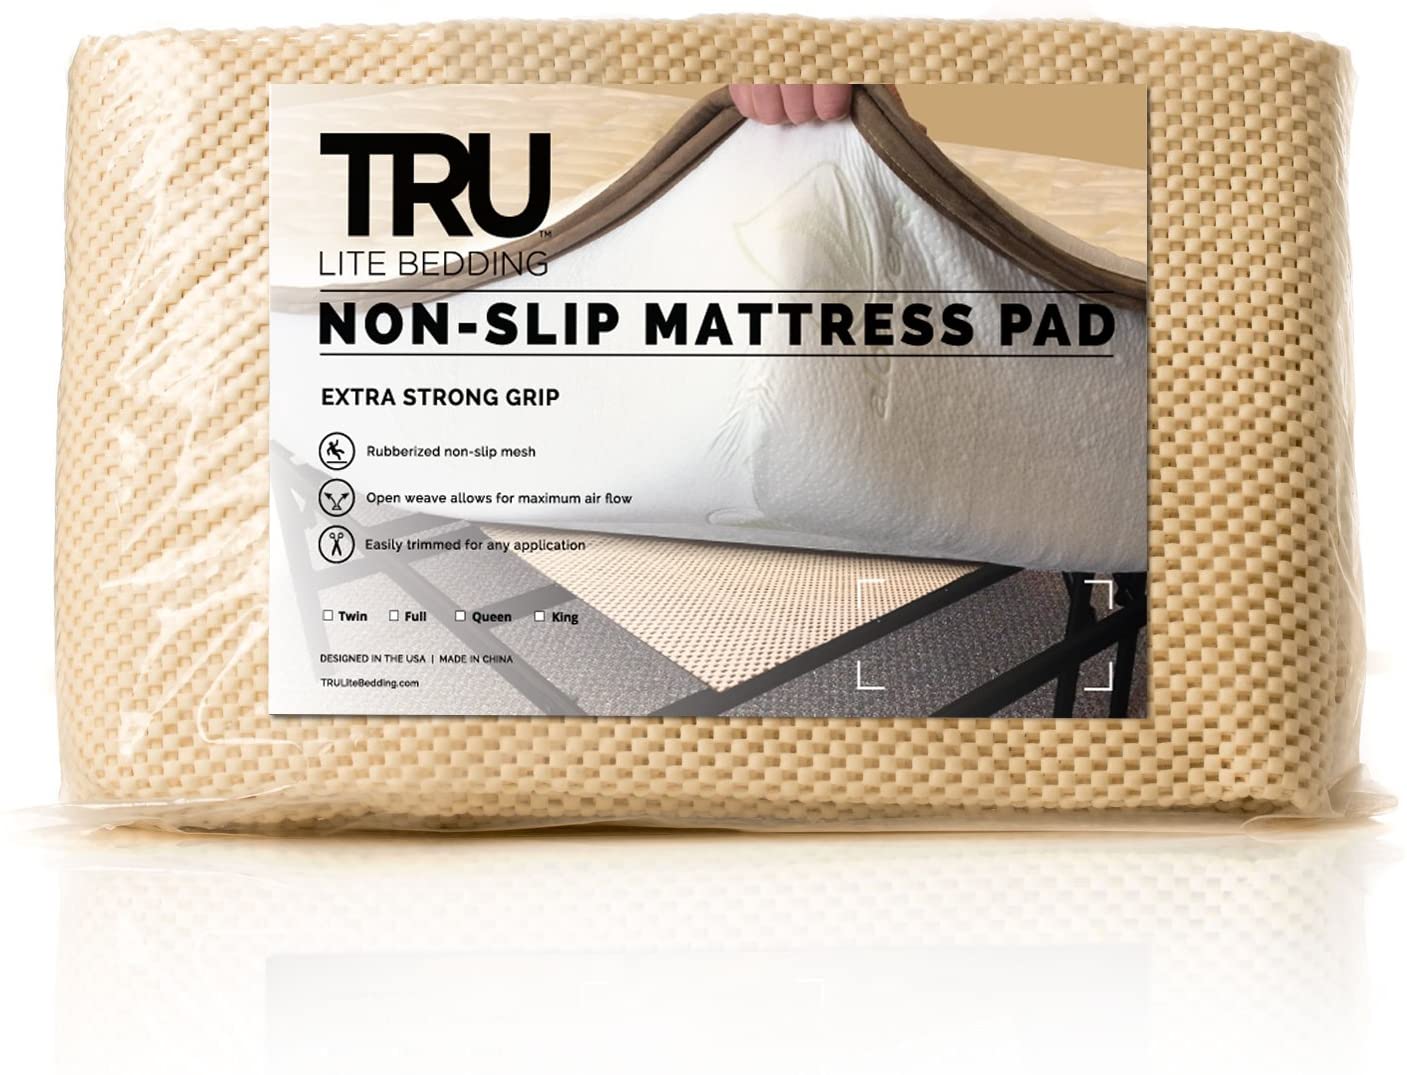 Tru Lite Bedding Non Slip Mattress Pad